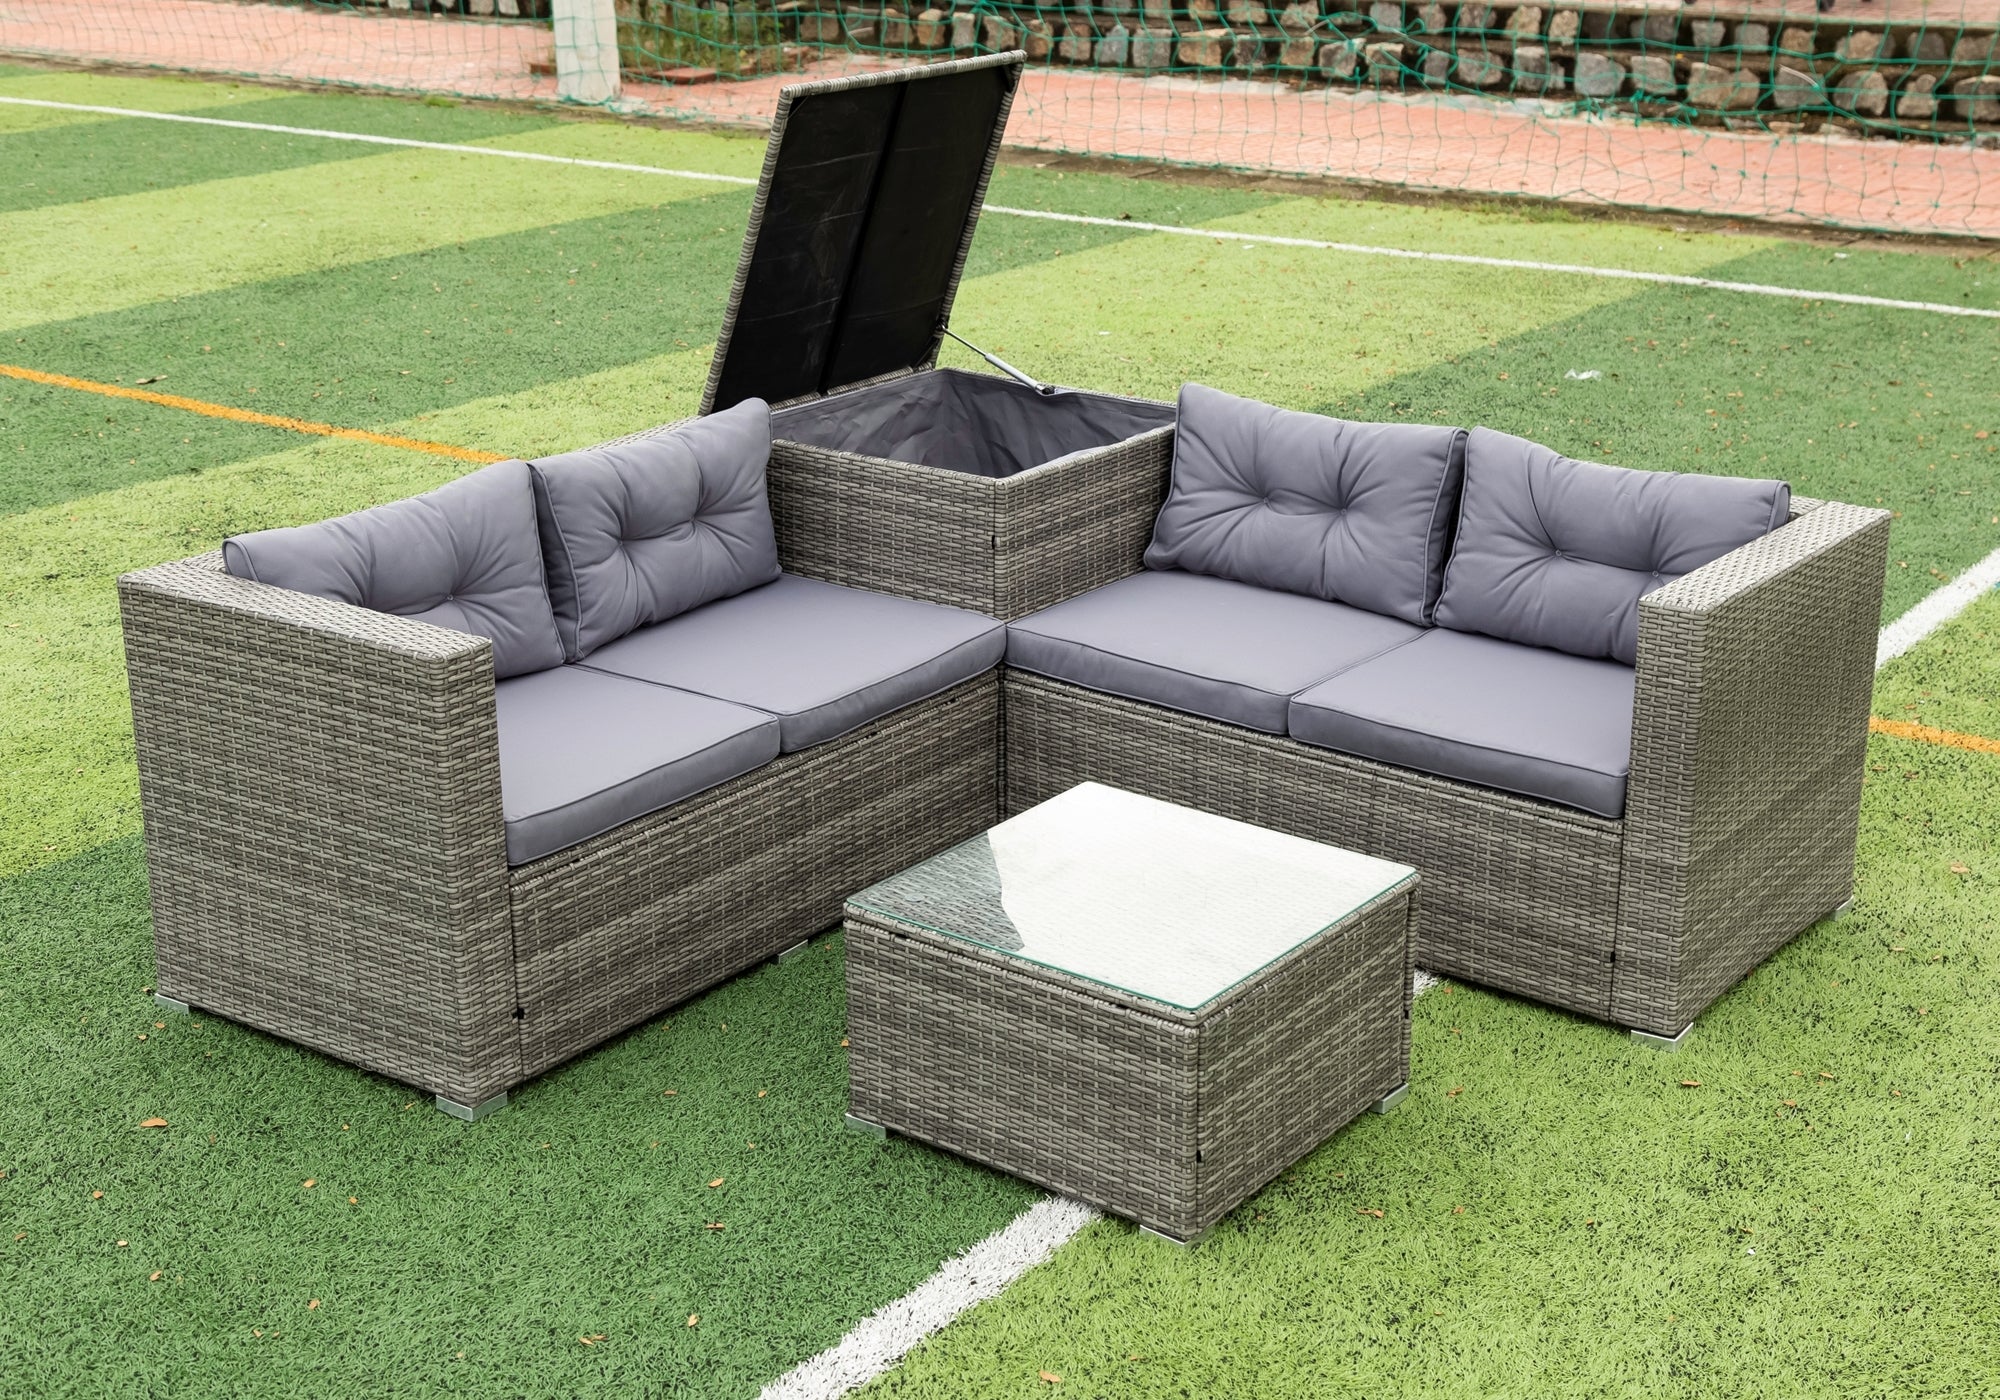 RaDEWAY 4 Piece Patio Sectional Wicker Rattan Outdoor Furniture Sofa Set with Storage Box Grey